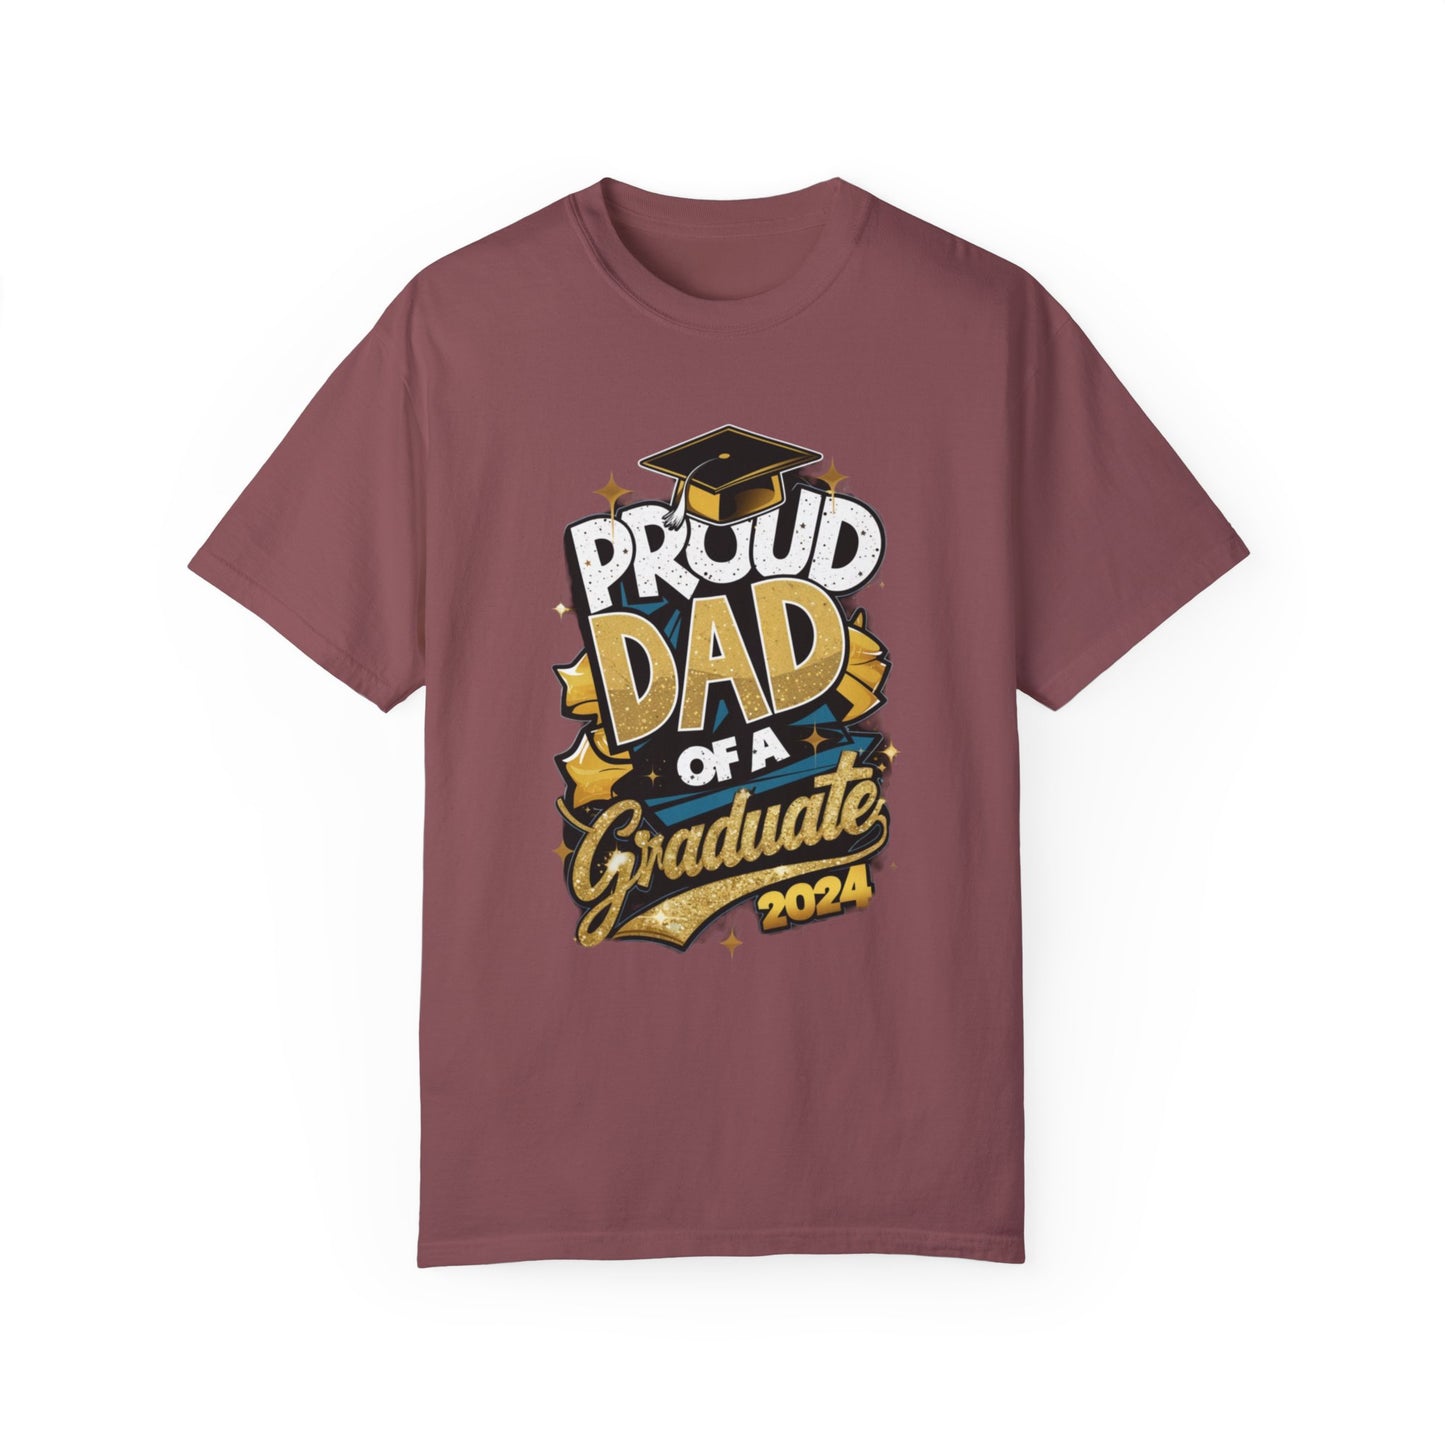 Proud Dad of a 2024 Graduate Unisex Garment-dyed T-shirt Cotton Funny Humorous Graphic Soft Premium Unisex Men Women Brick T-shirt Birthday Gift-5